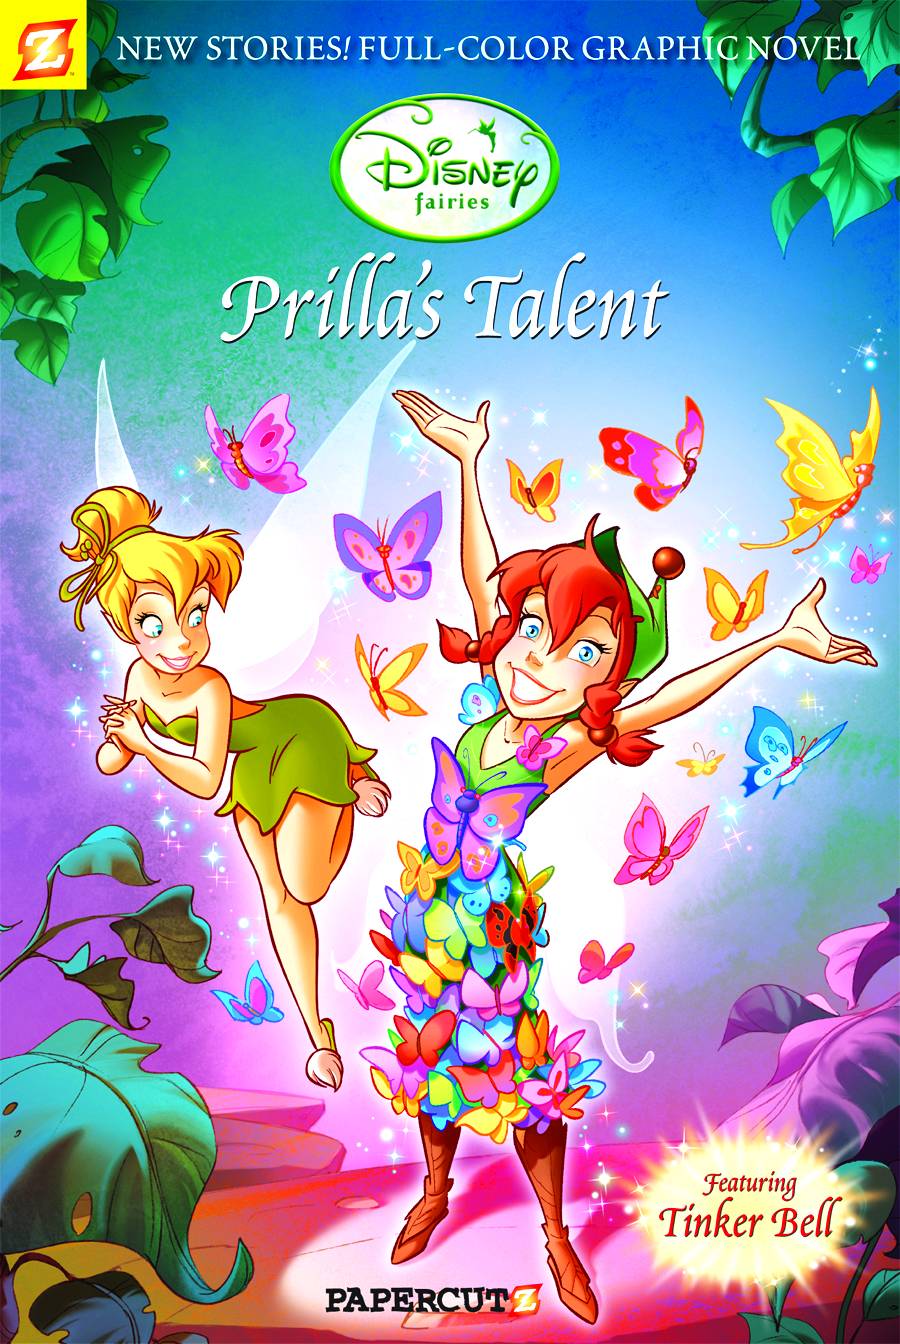 Disney Fairies Graphic Novel Volume 1 Prillas Talent